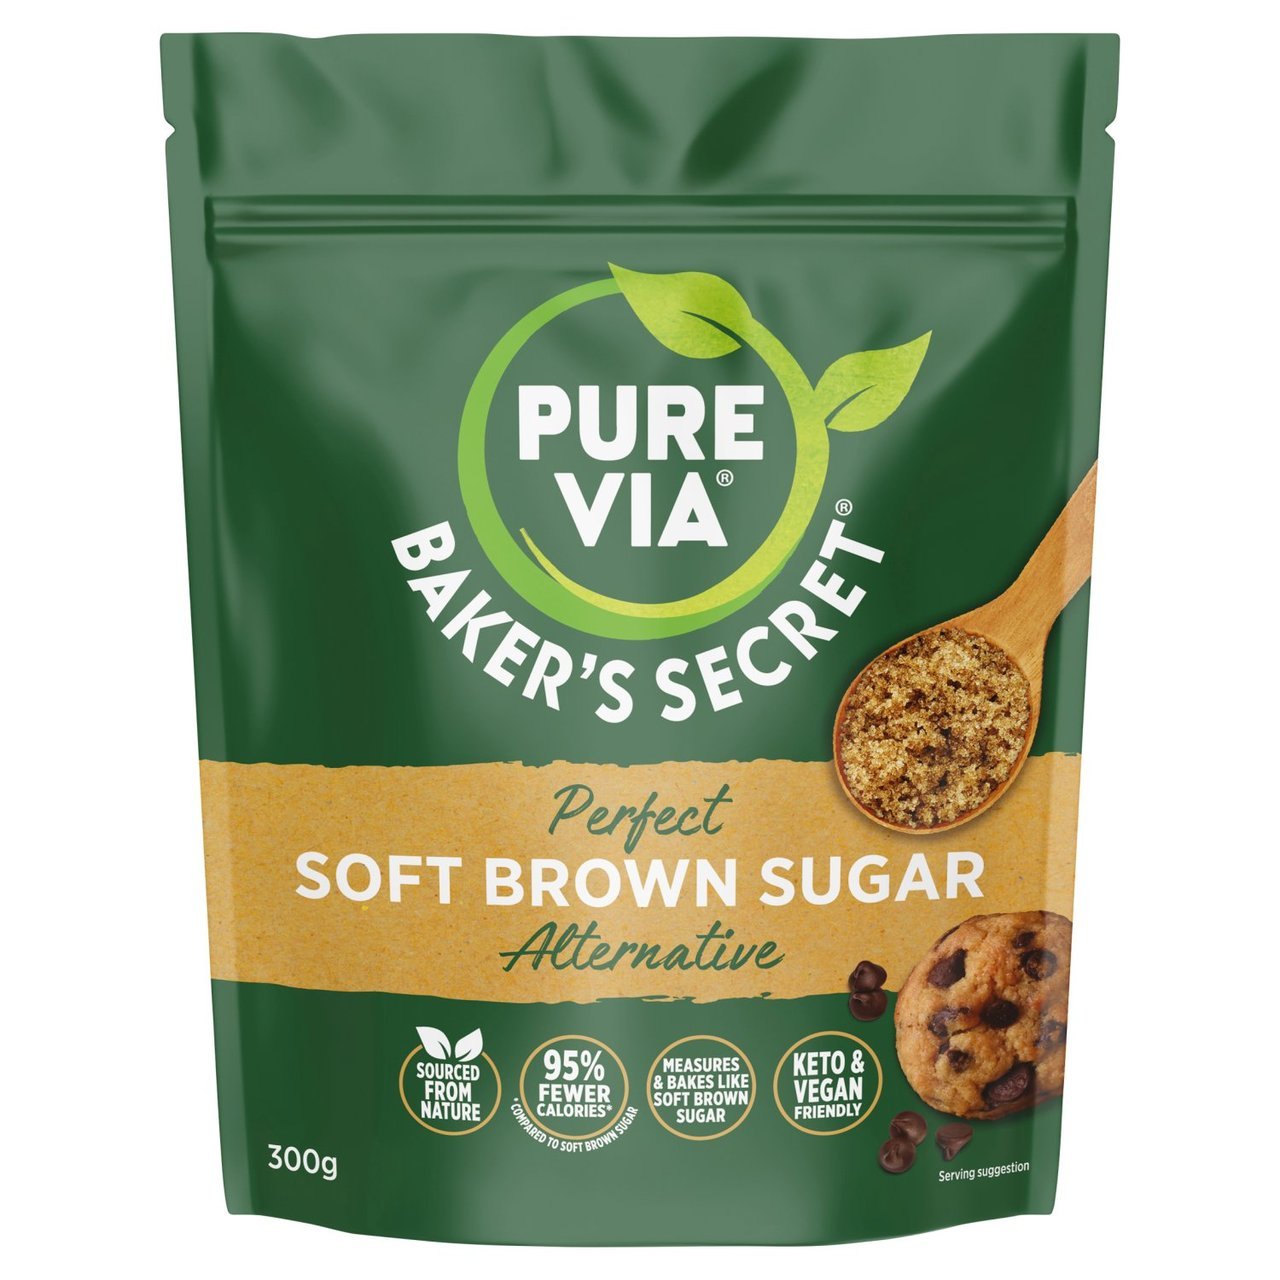 Pure Via Bakers Secret alternativa mehkemu rjavemu sladkorju - theskinnyfoodco